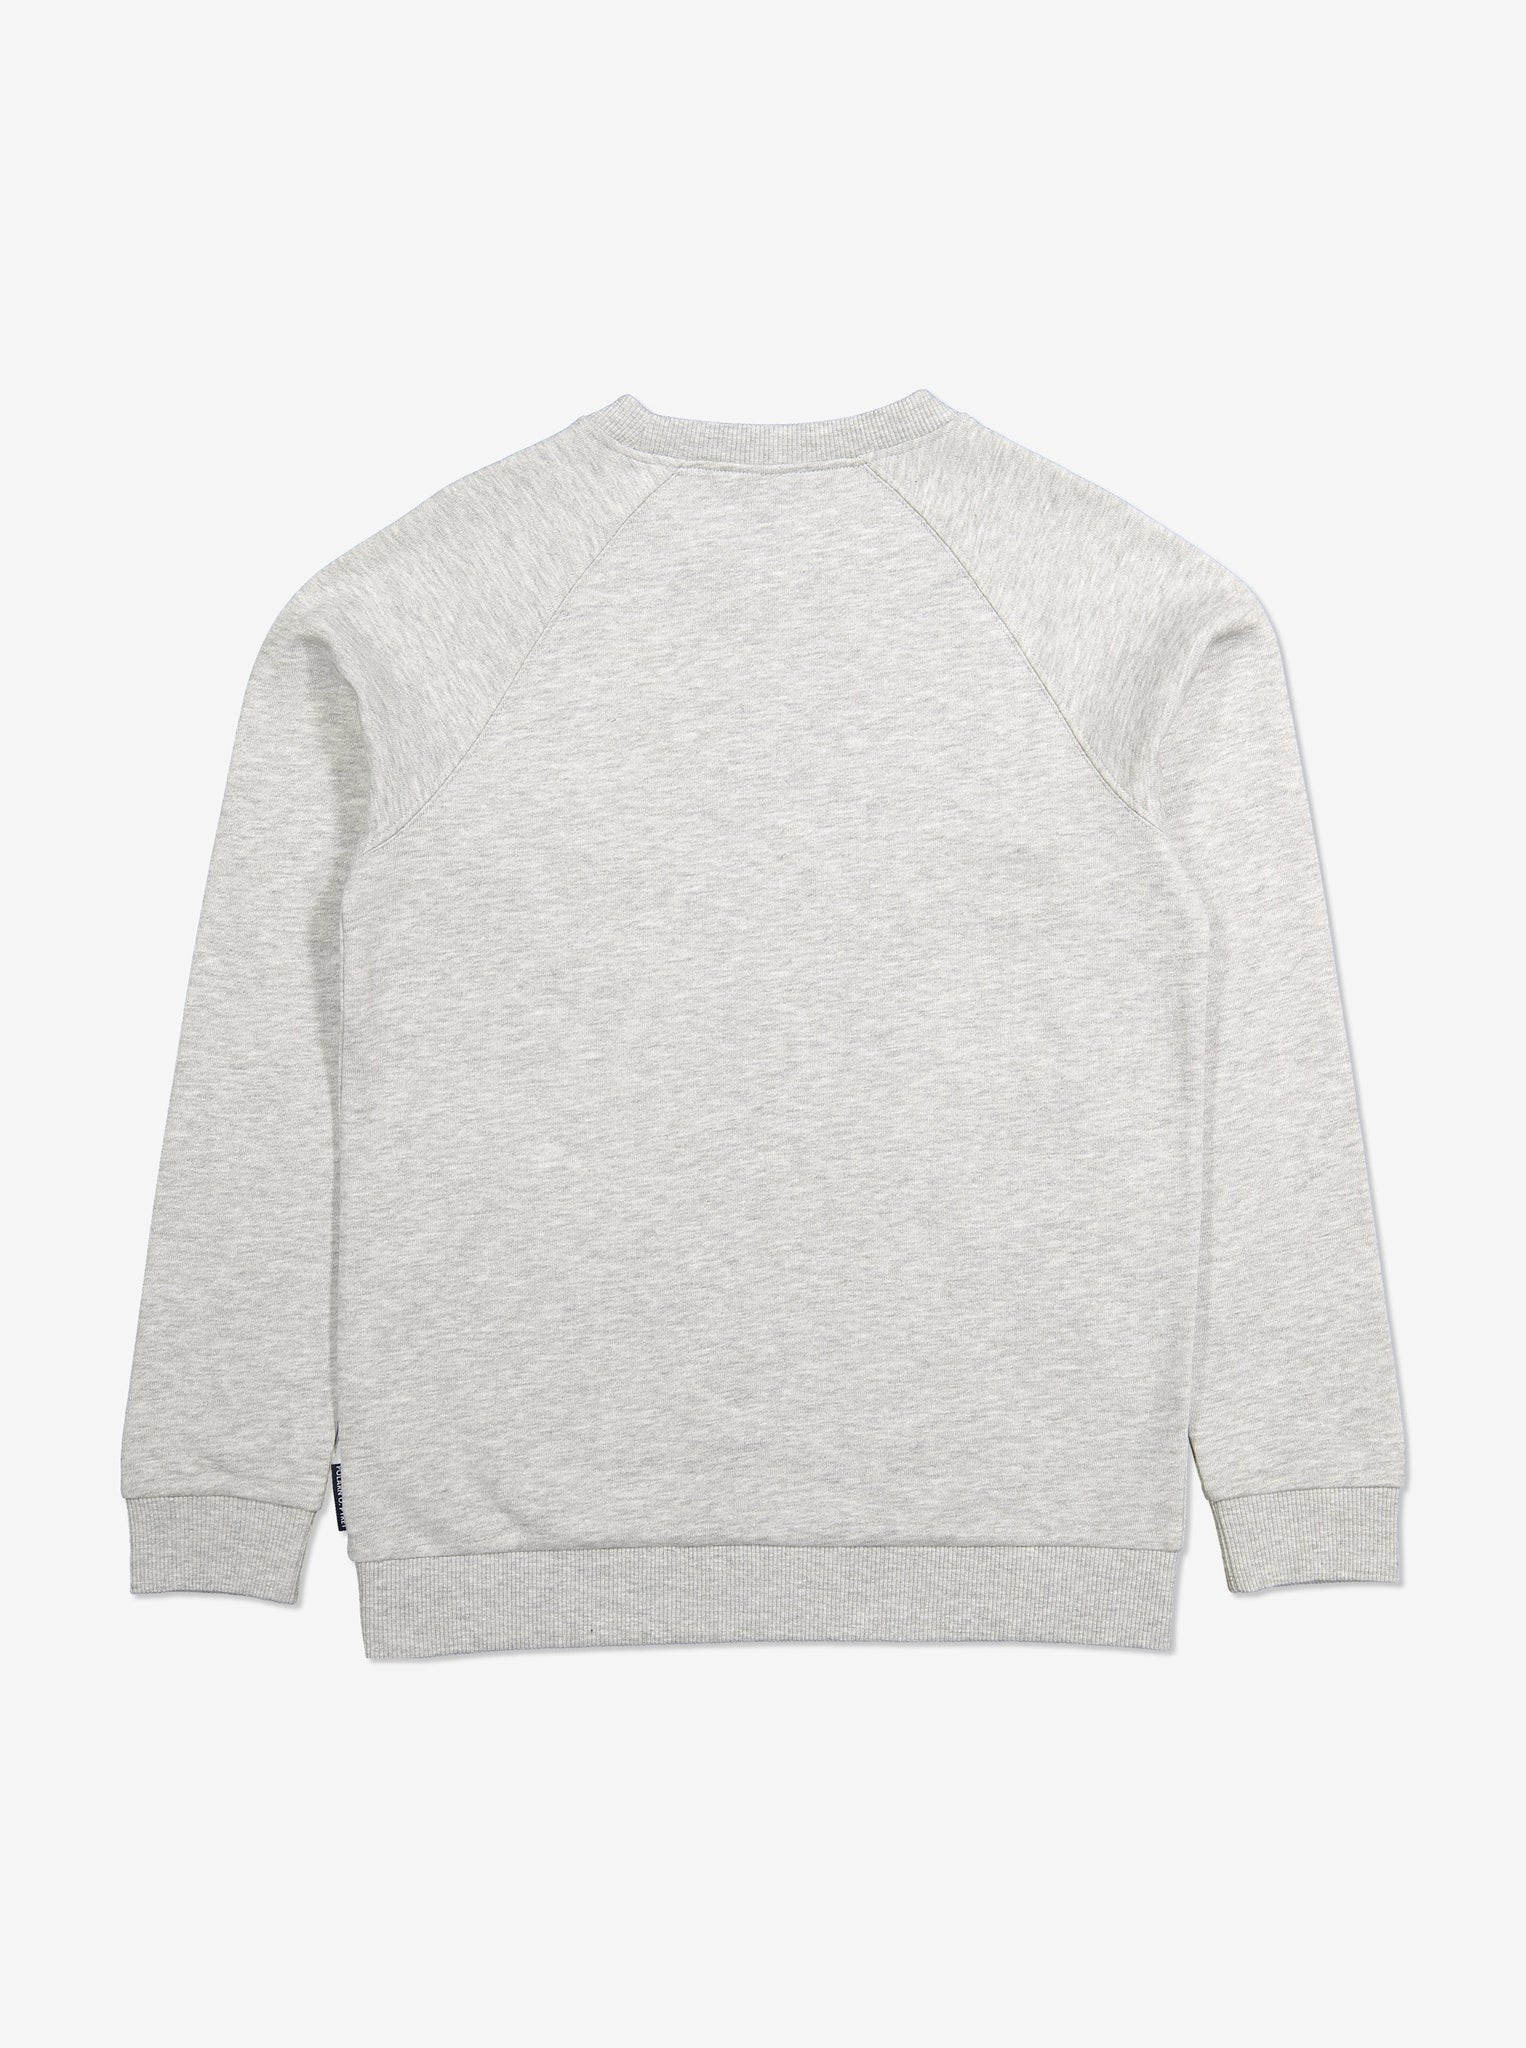 Grey Kids Sweatshirt, sustainable organic cotton, durable and comfortable, polarn o. pyret quality